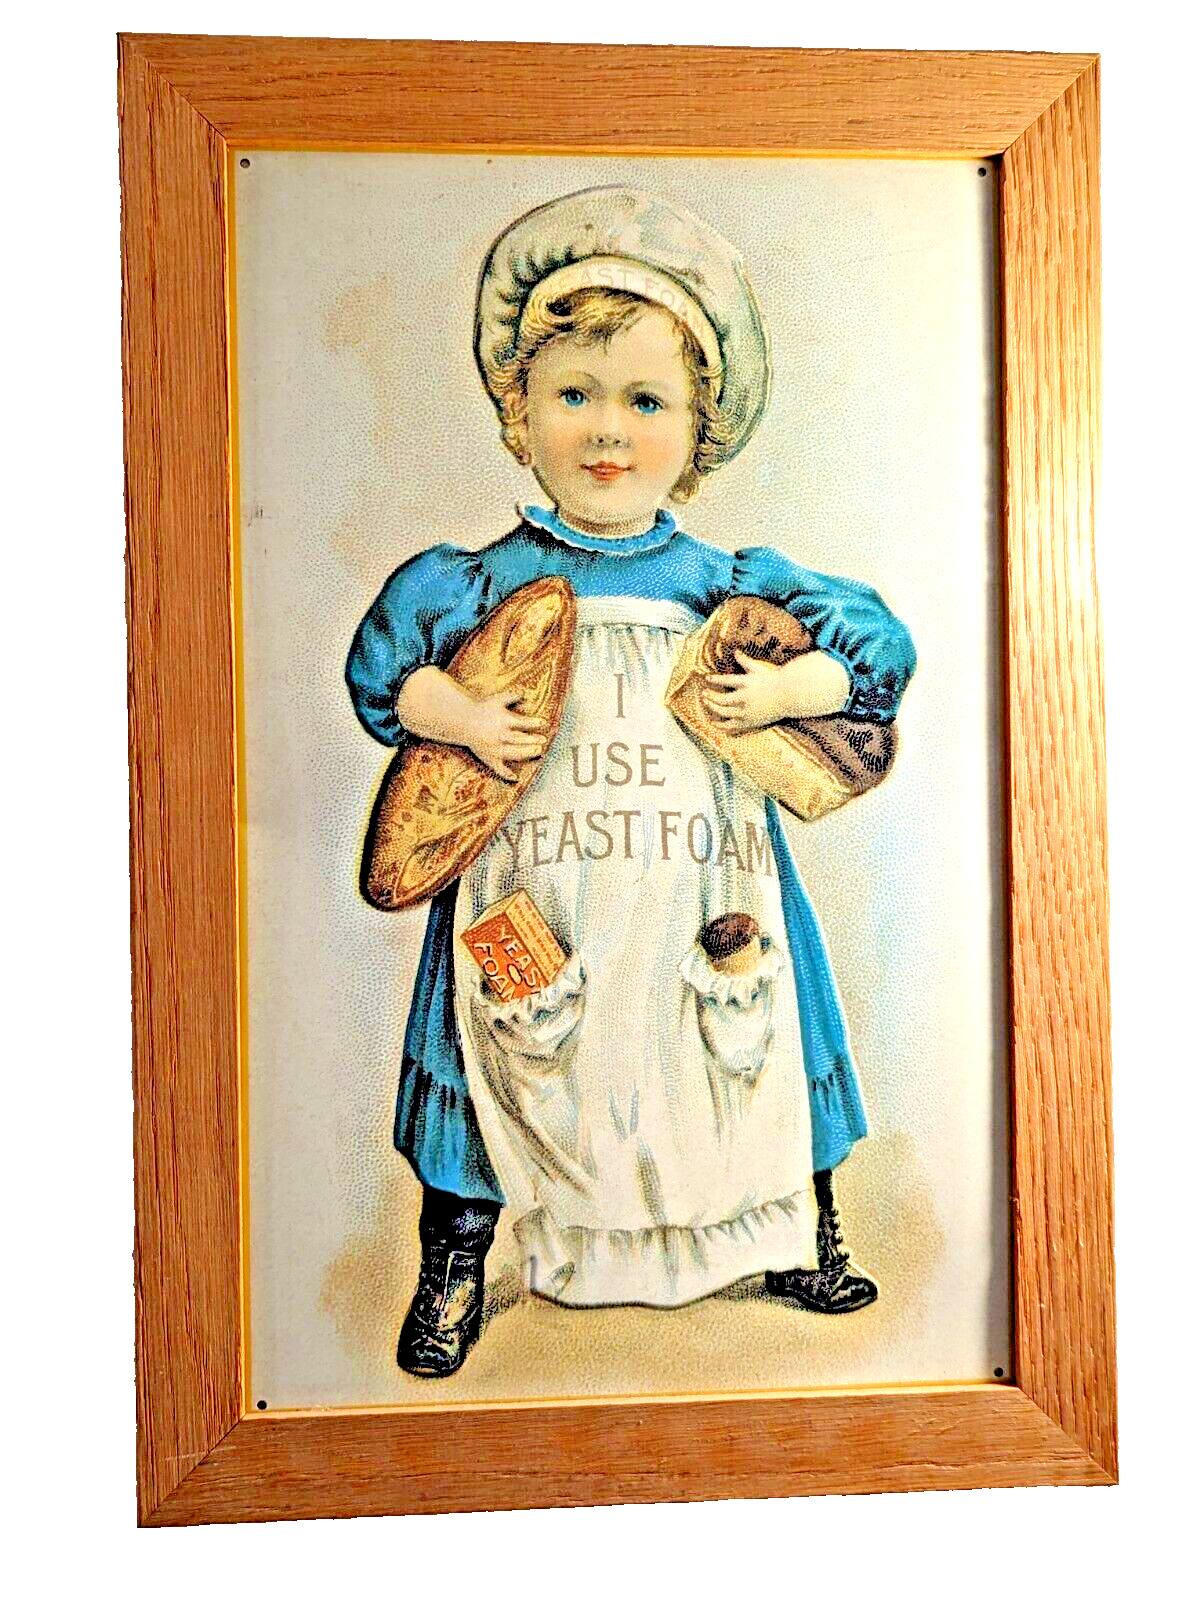 I Use Yeast Foam Embossed Tin Sign Wood Frame Vintage Girl Baker 19 x 13 inch